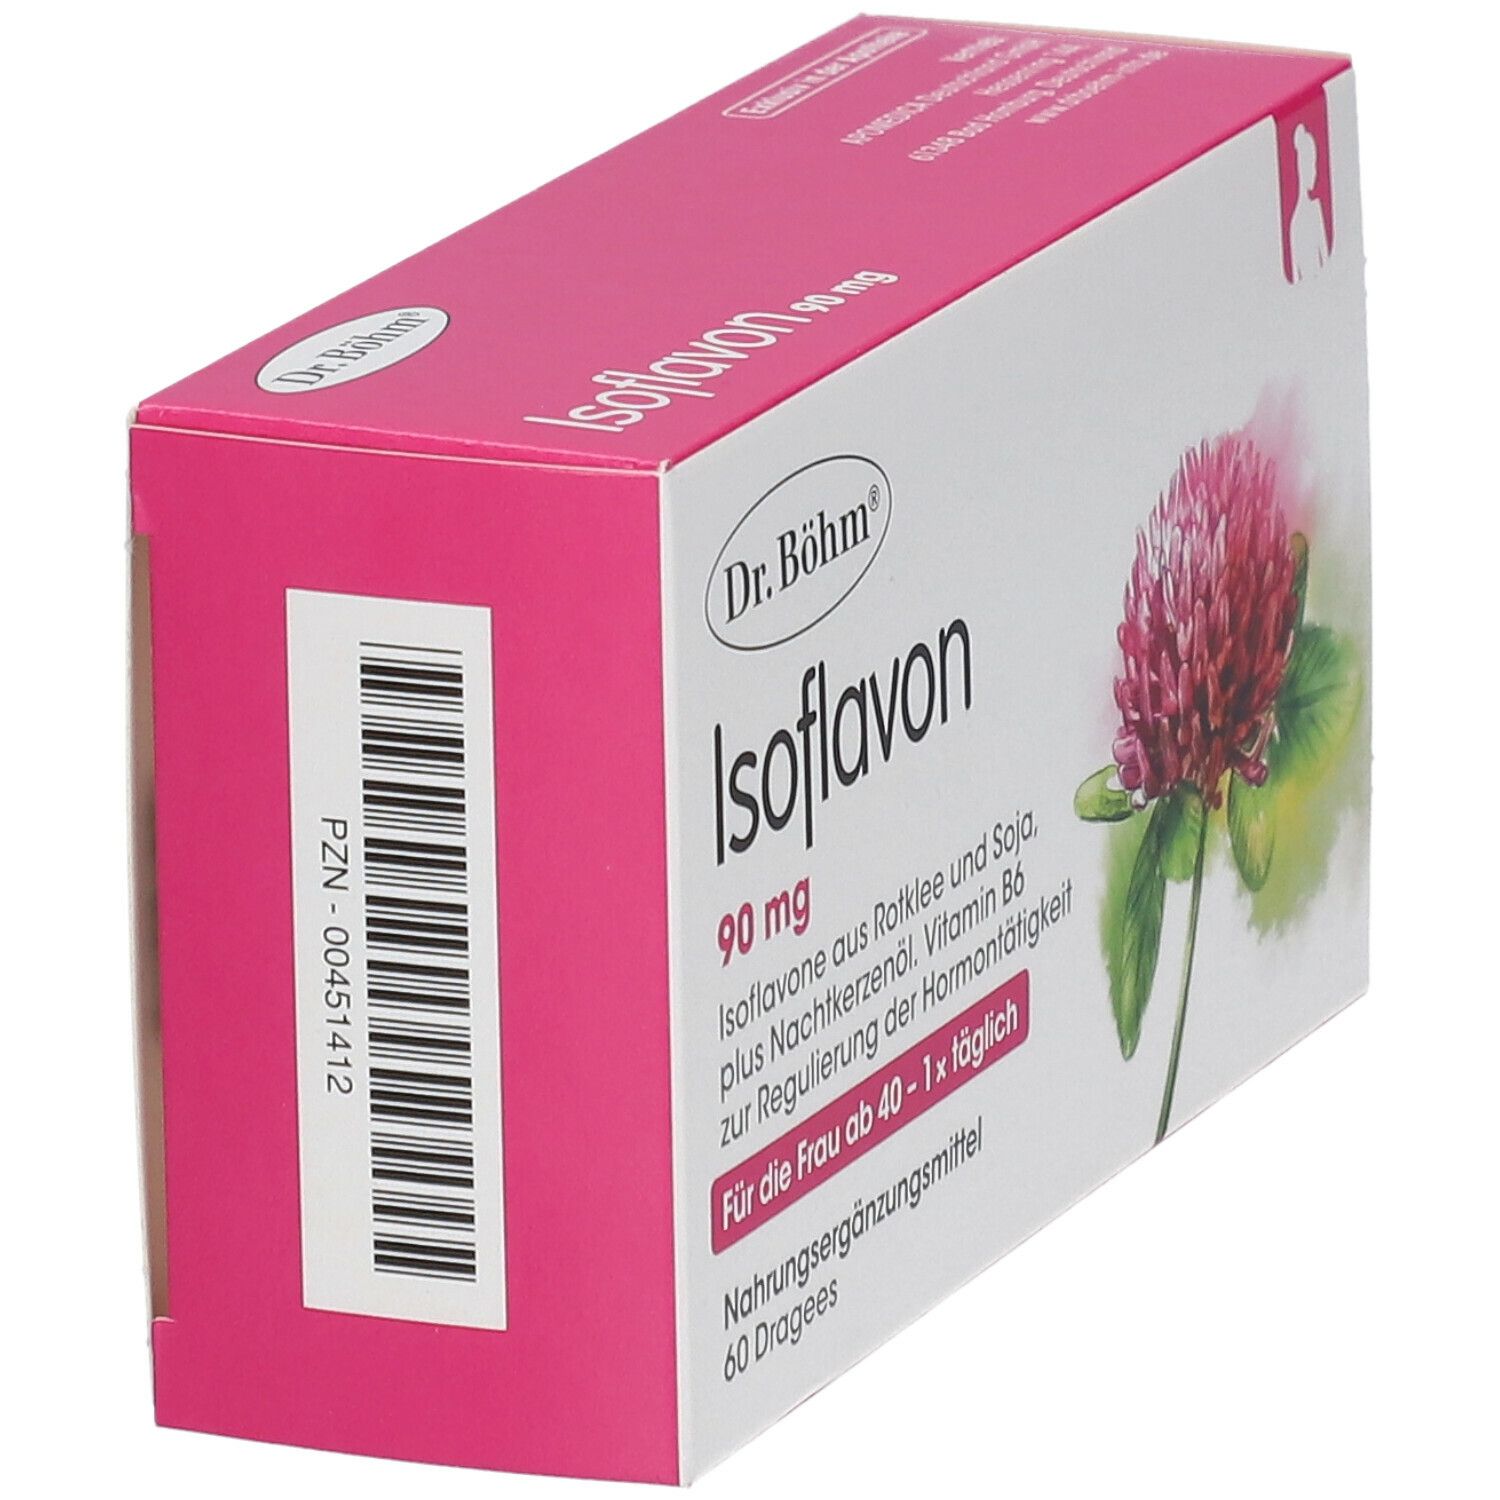 Dr. Böhm® Isoflavon 90 mg